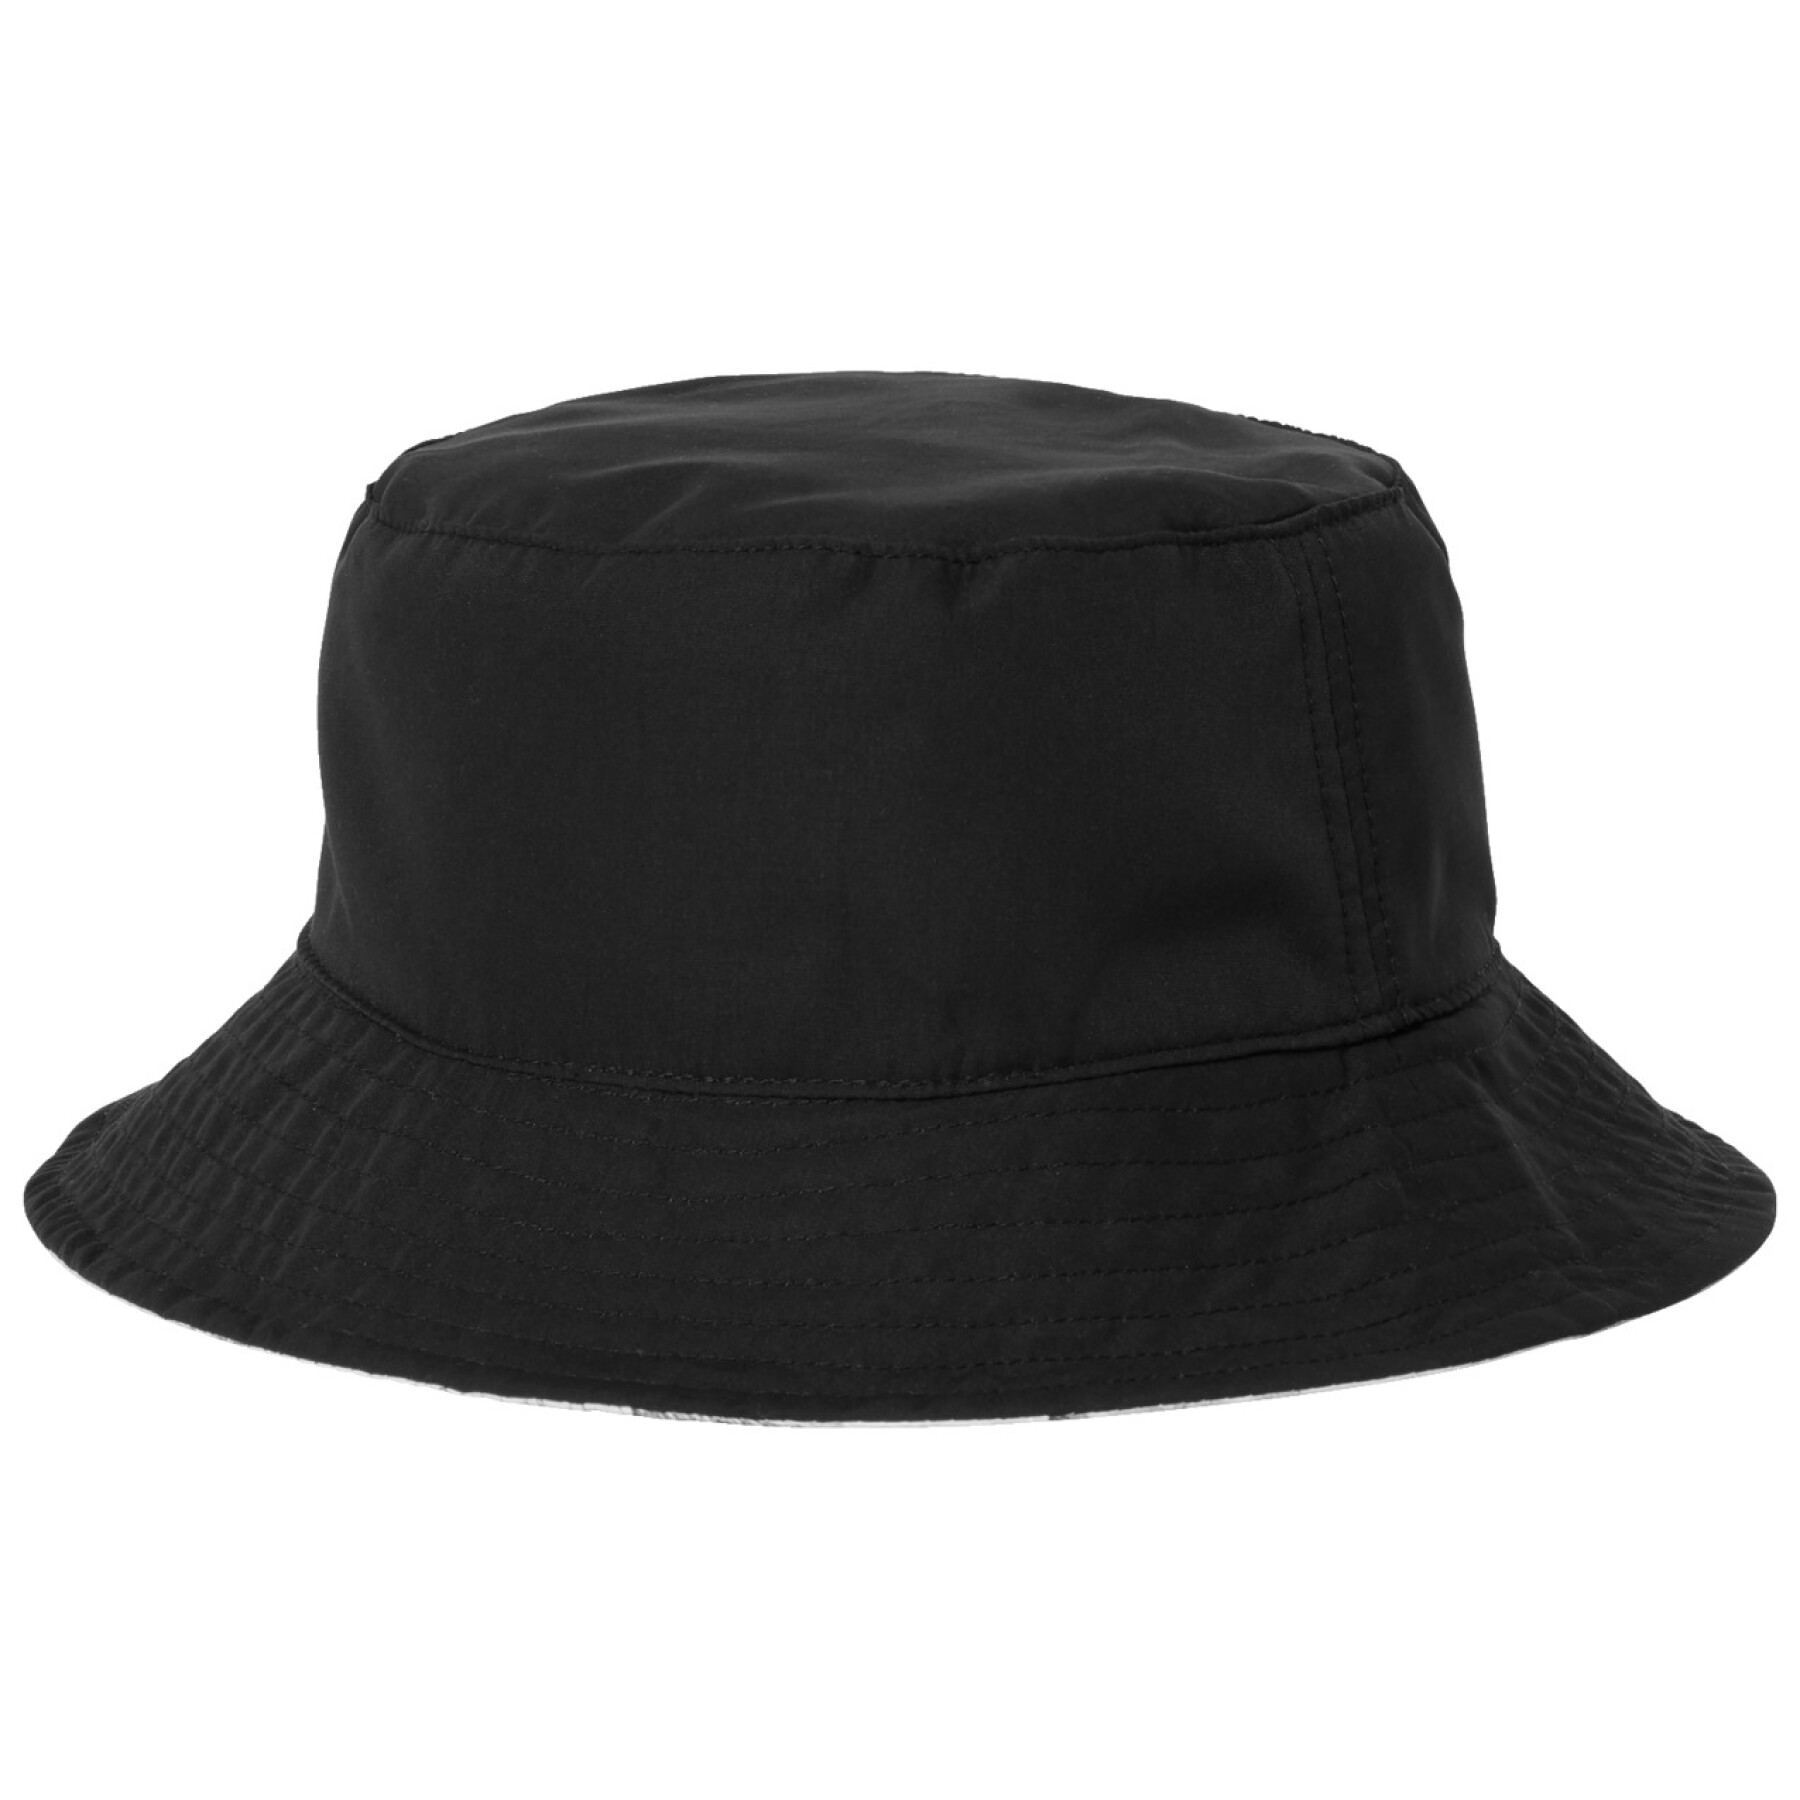 Hoed Helly Hansen Bucket Hat